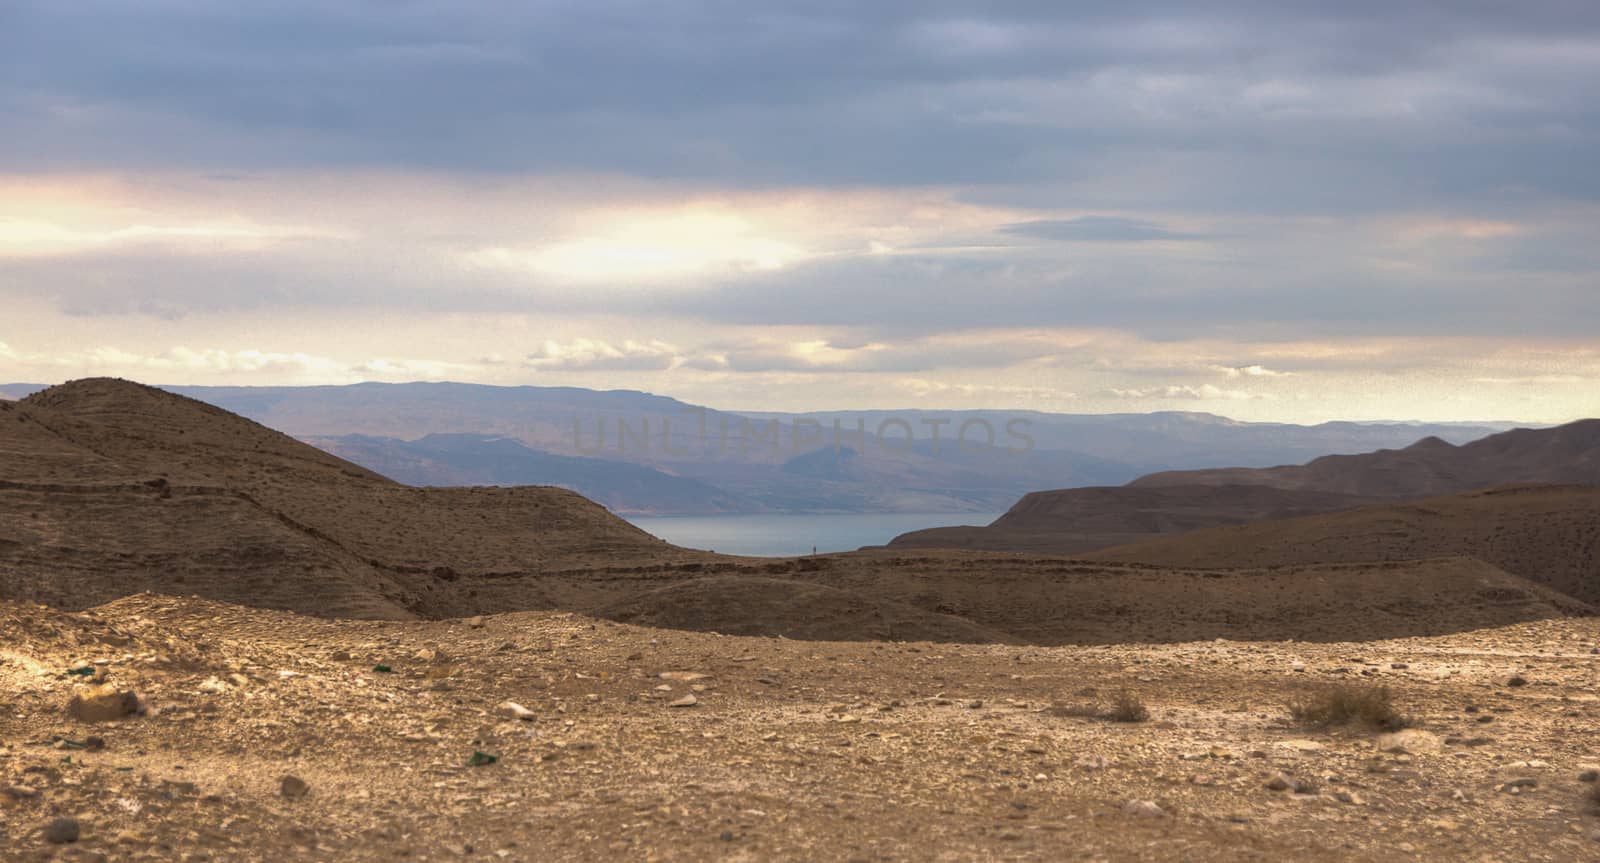 Christian travel in judean desert by javax